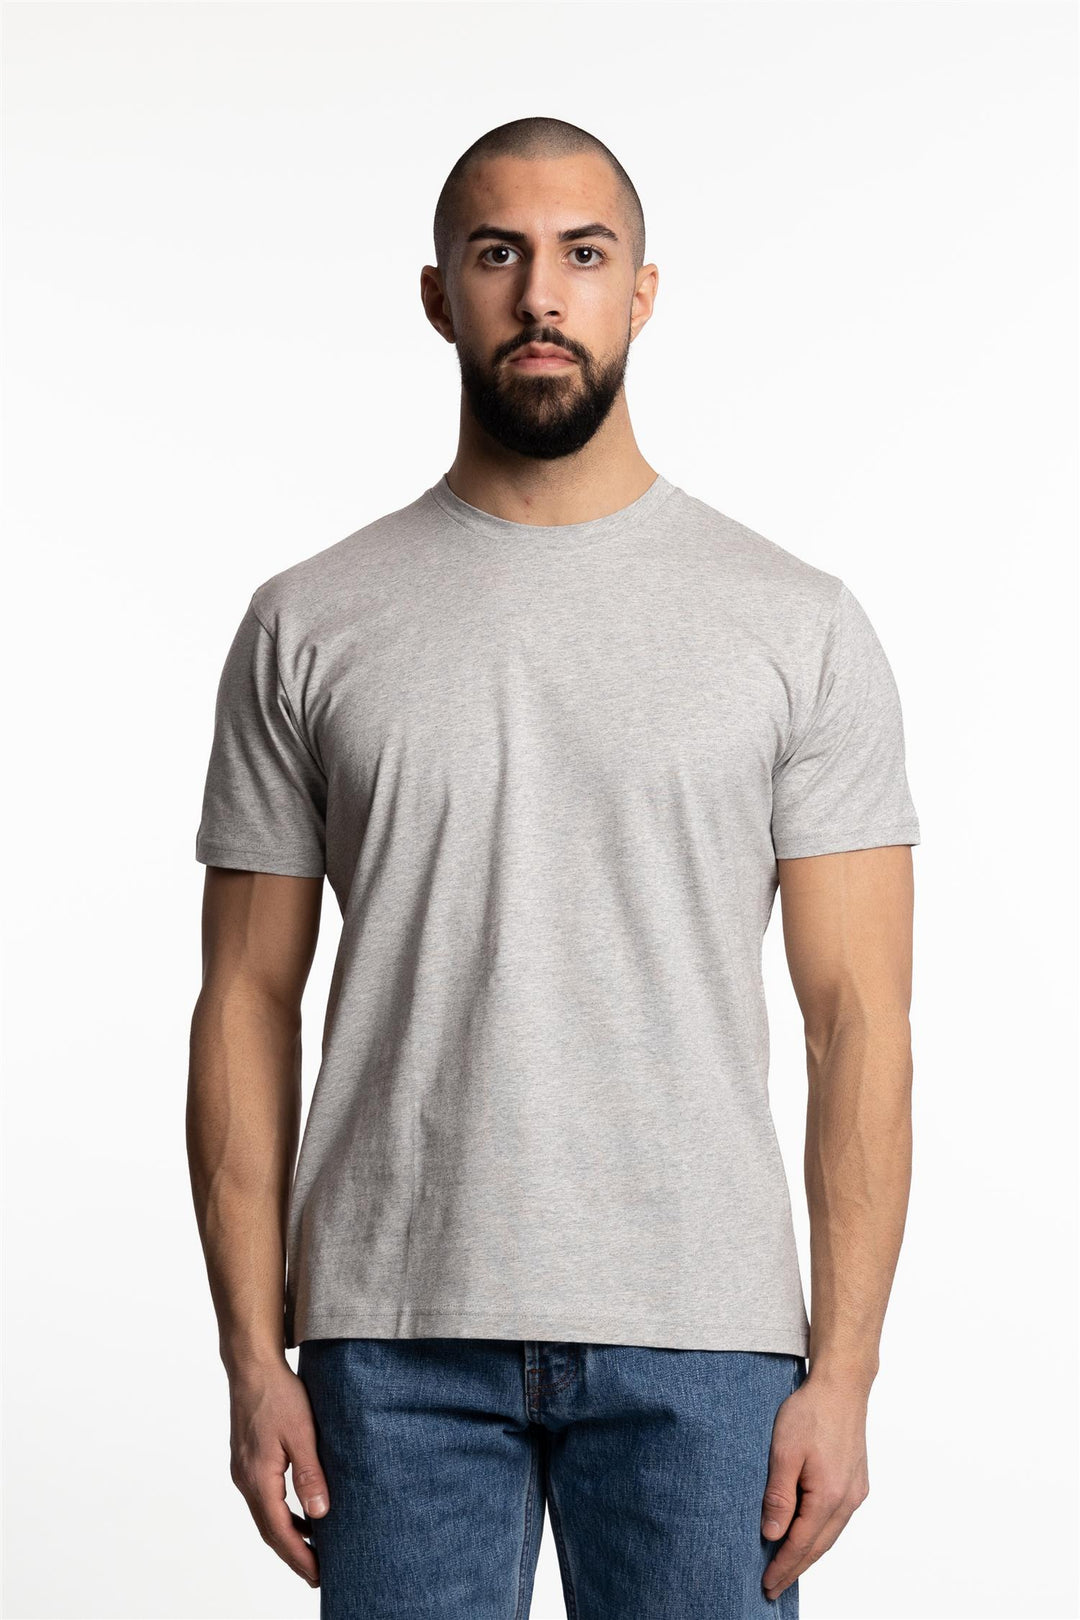 Riviera Midweight T-Shirt Grey Melange